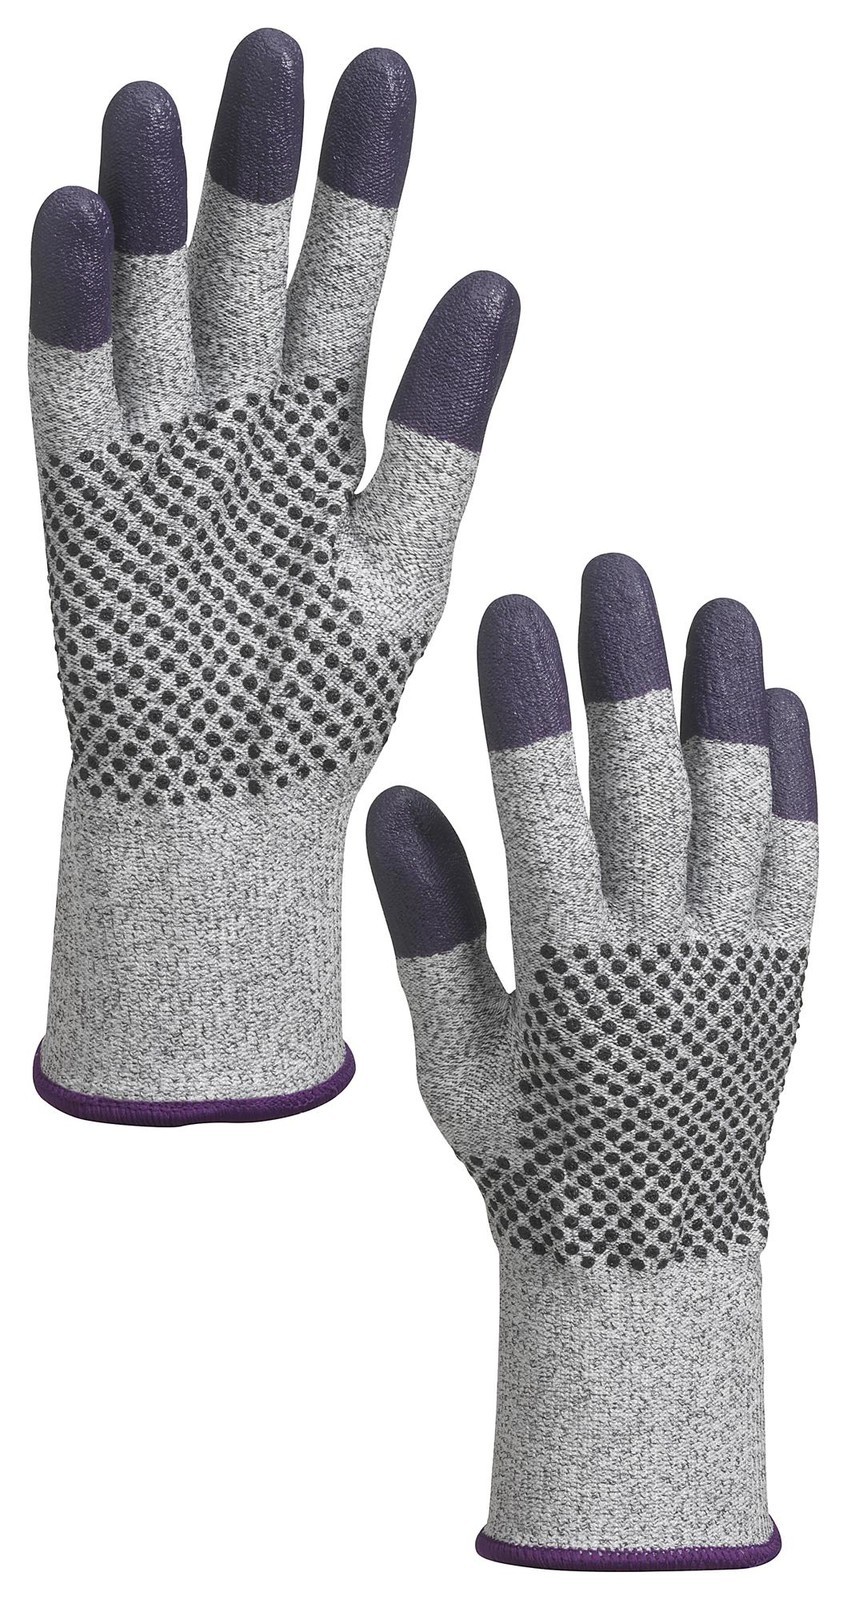 Kleenguard 97431 Glove, Knit Wrist, M, Blk/grey/purple